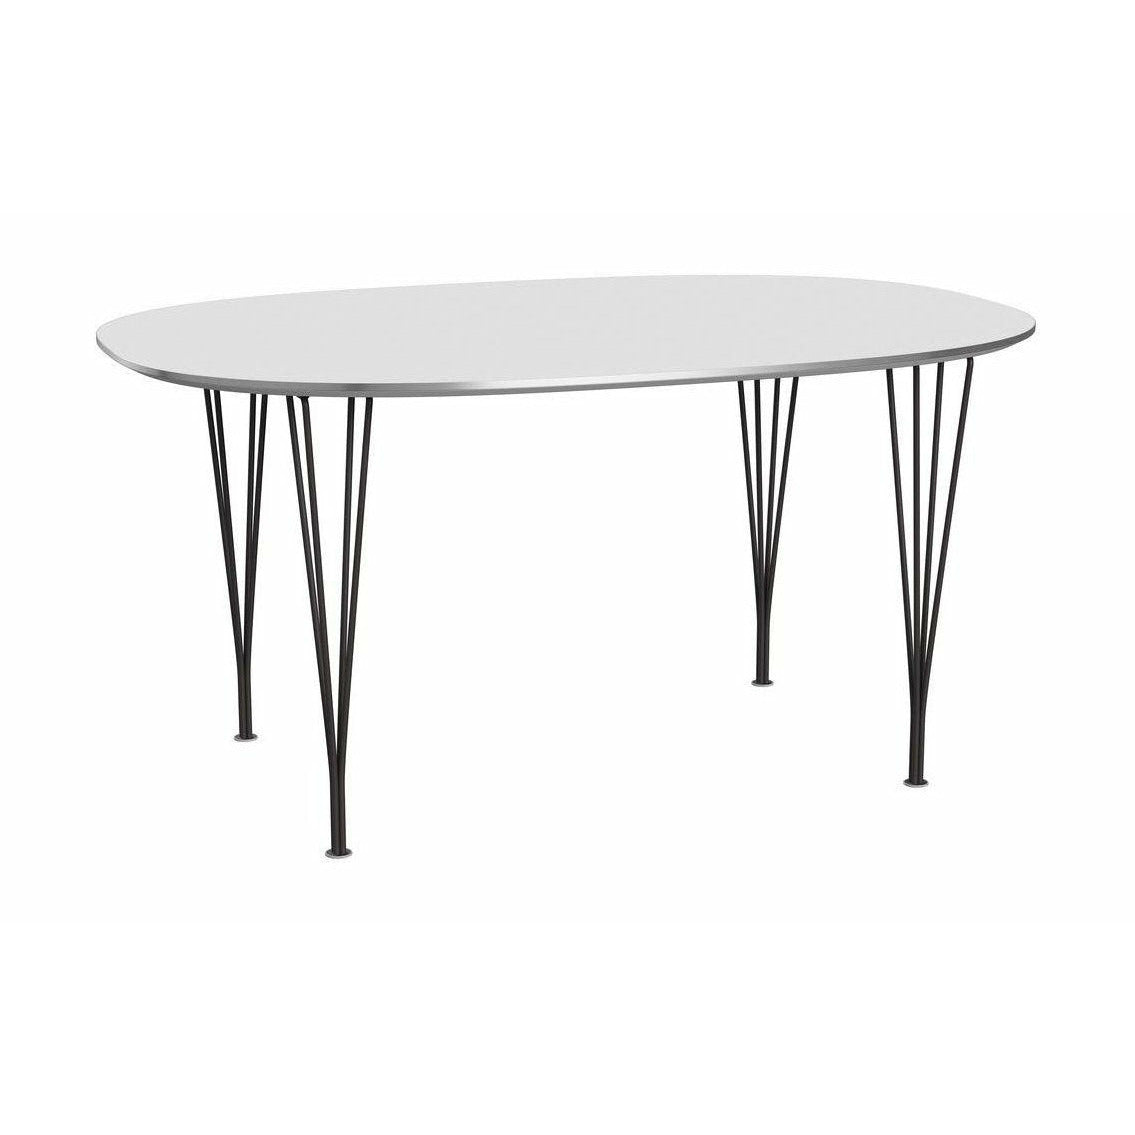 FRITZ HANSEN SUPER ELLIPSE TABLE 100X150 CM, biały/ciepły grafit